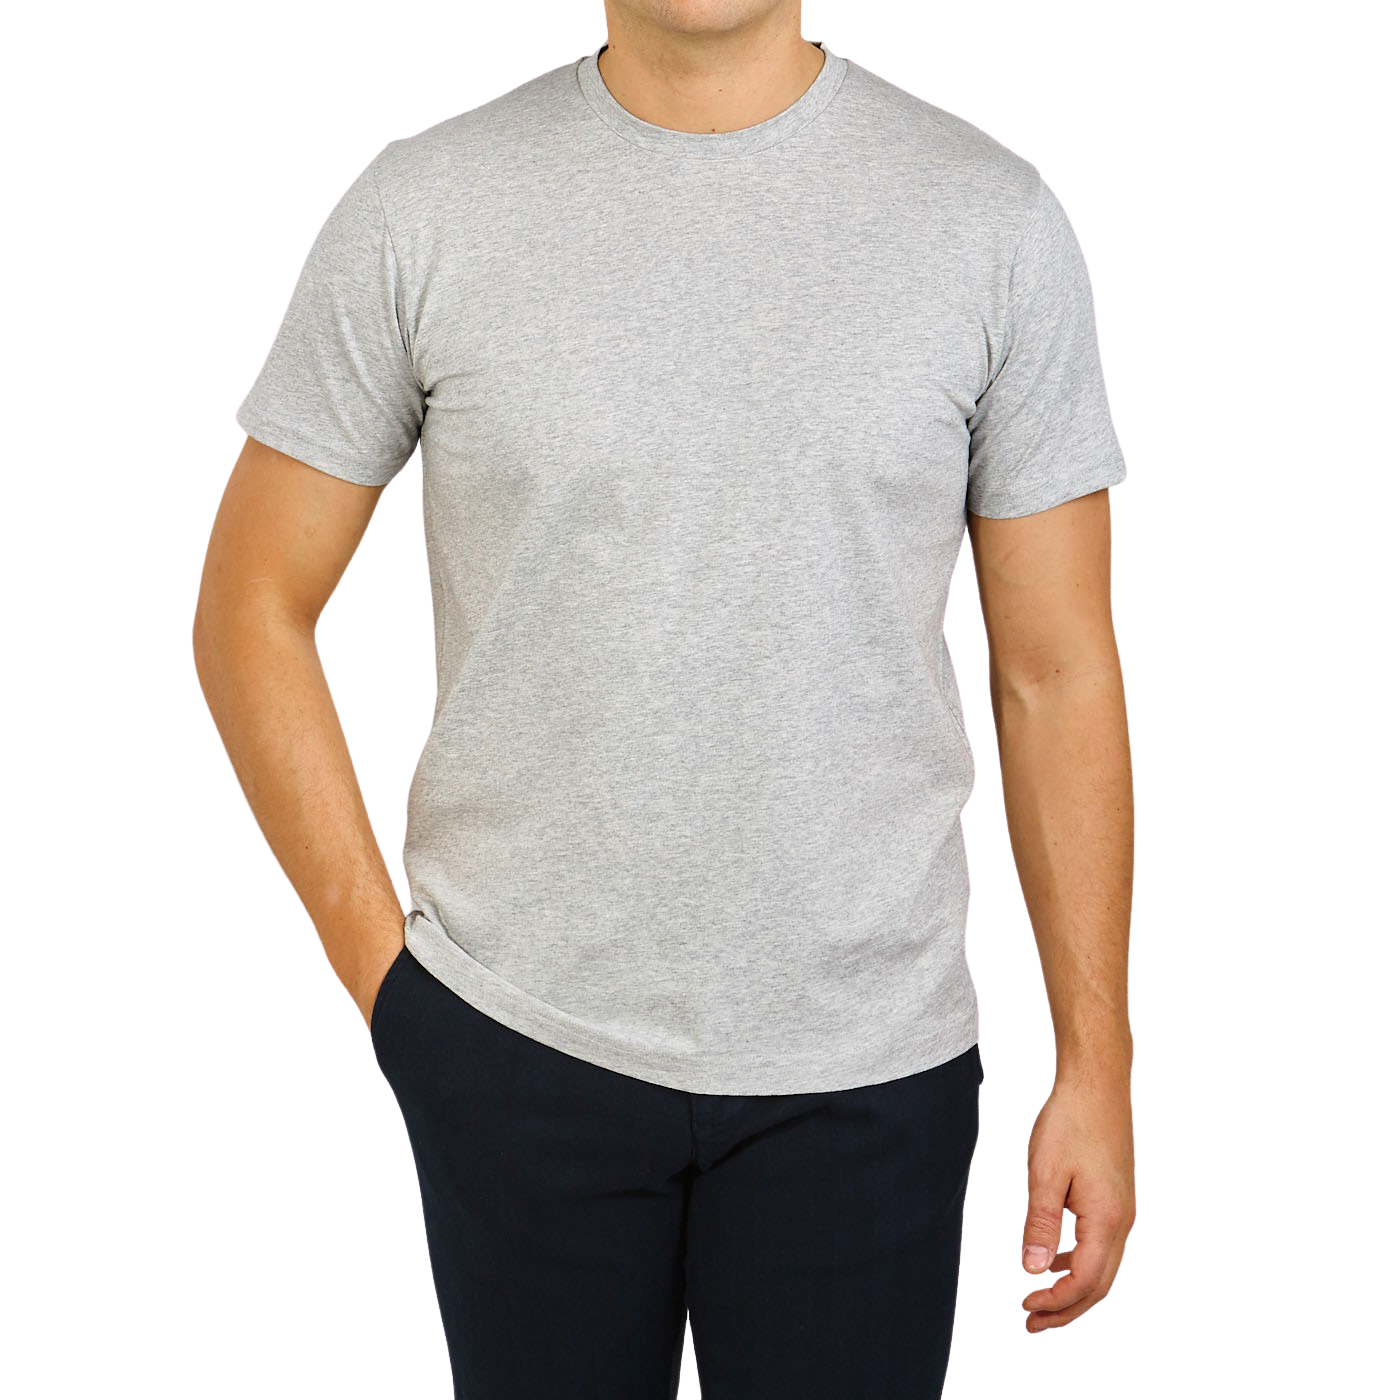 Gildan Plain Cotton T-Shirt Short Sleeve Solid Blank Design Tee Men Tshirt S-XL